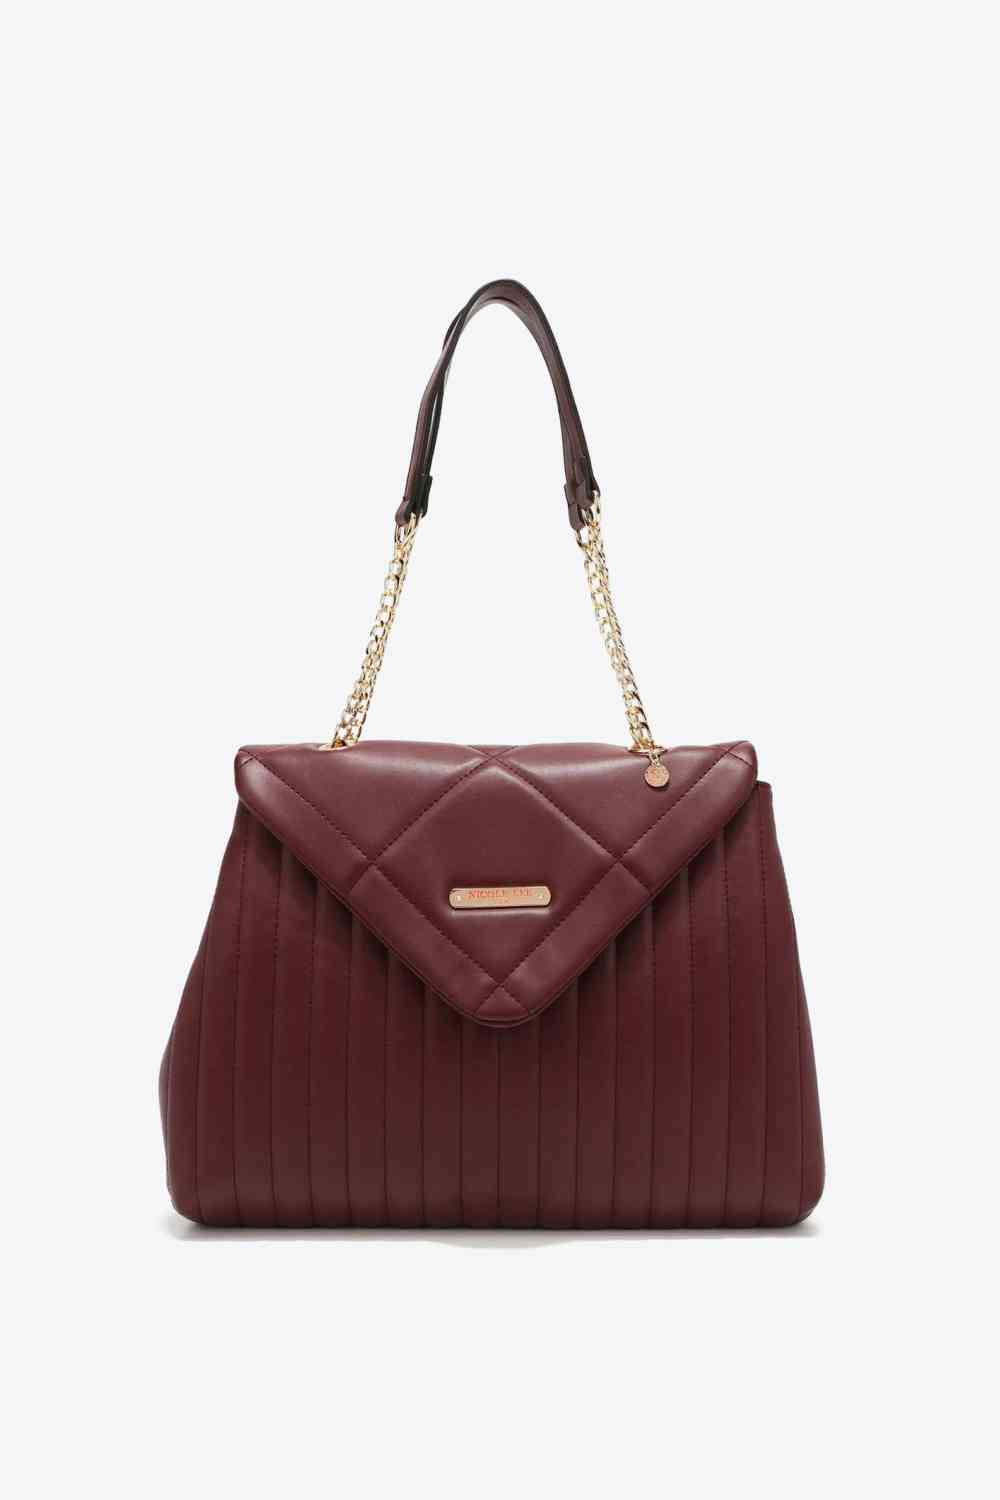 Nicole Lee USA A Nice Touch Handbag Plum One Size